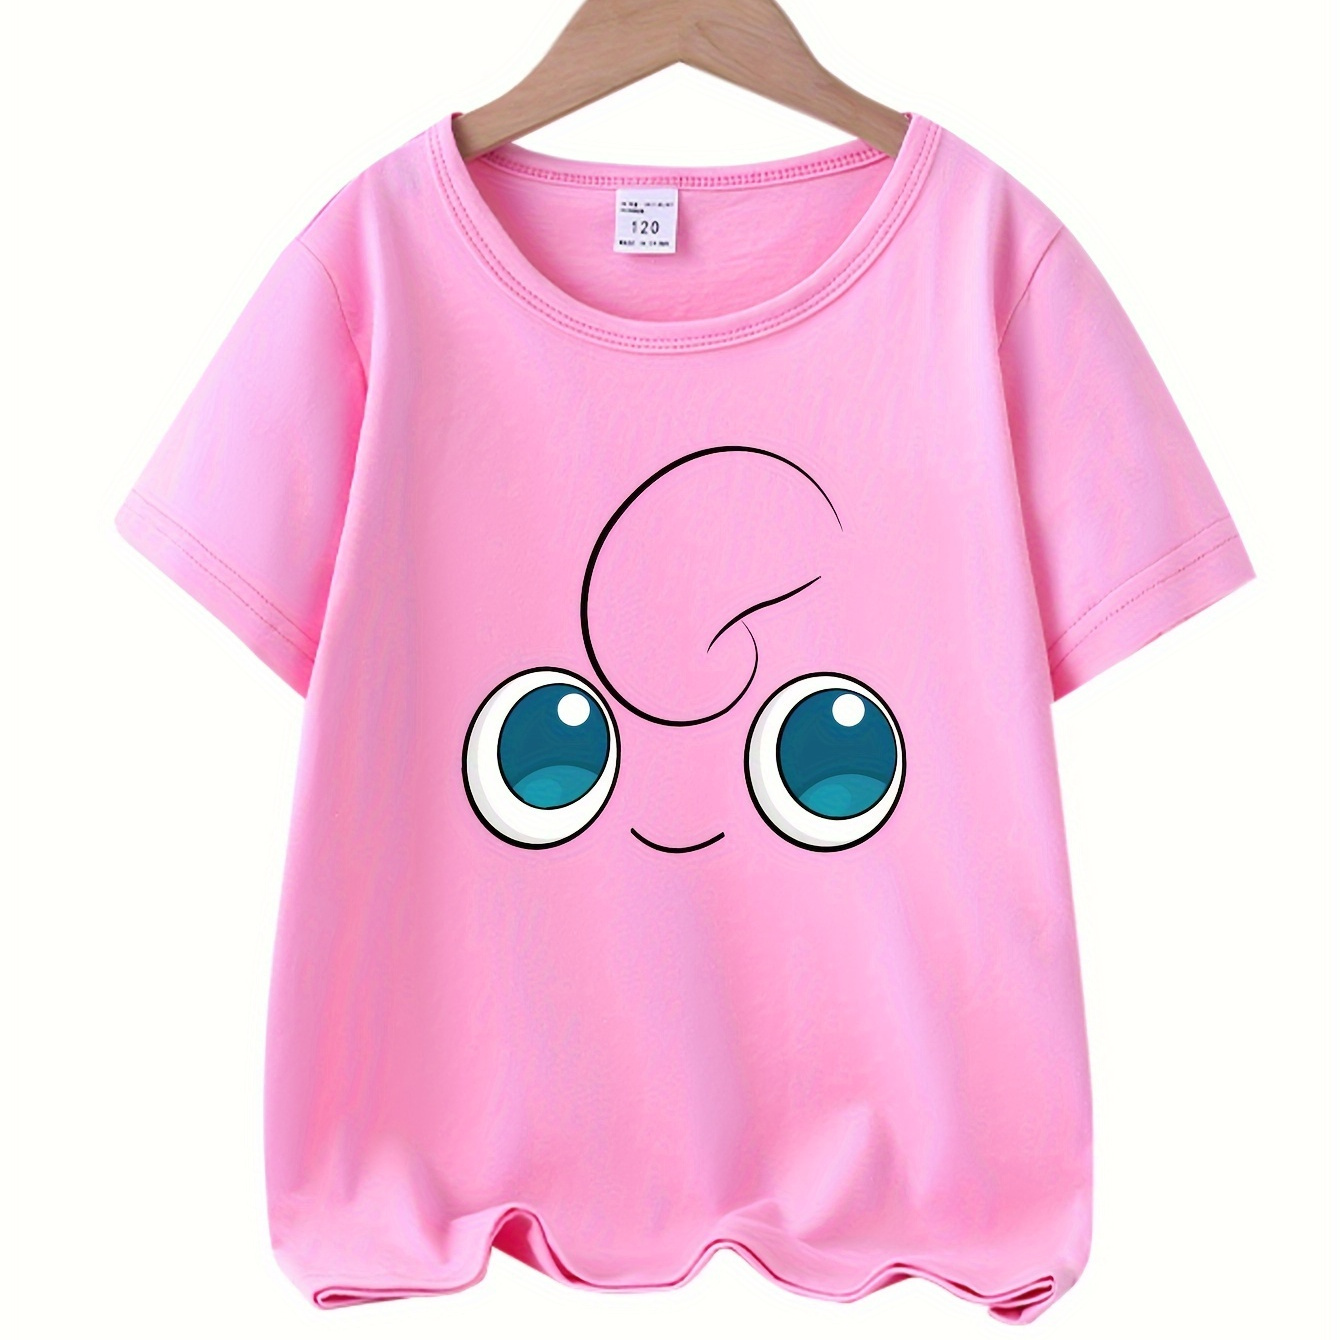 

100% Cotton, Girls Sweet Cartoon Eyes Graphic Short Sleeve T-shirt Tops For Summer Gift